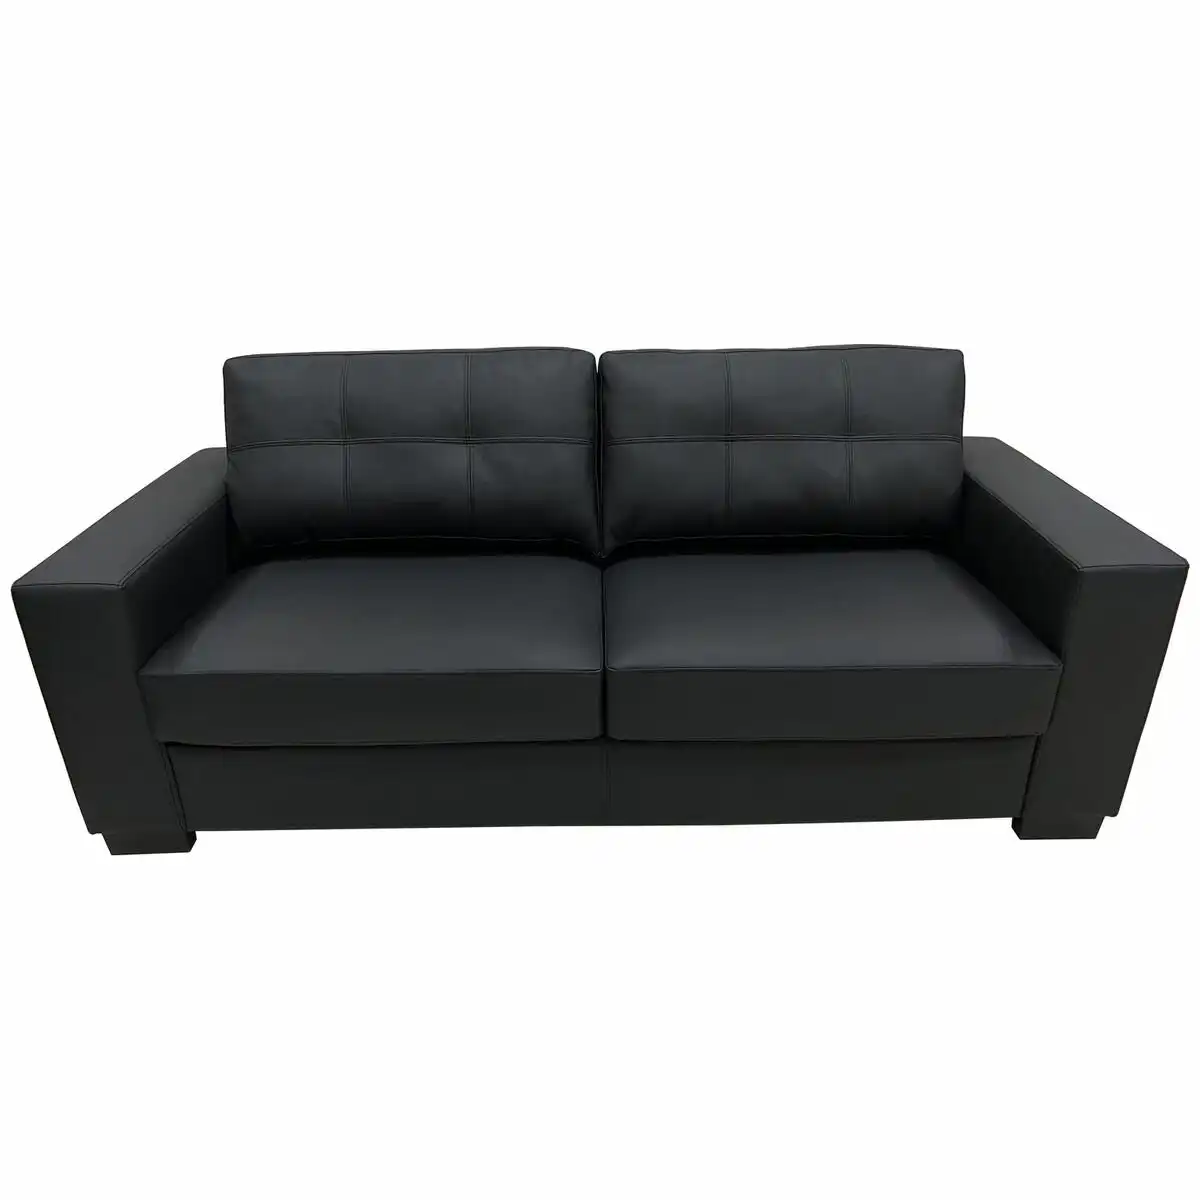 SILC Global Bari 2.5 Seater Sofa Bed PU Black